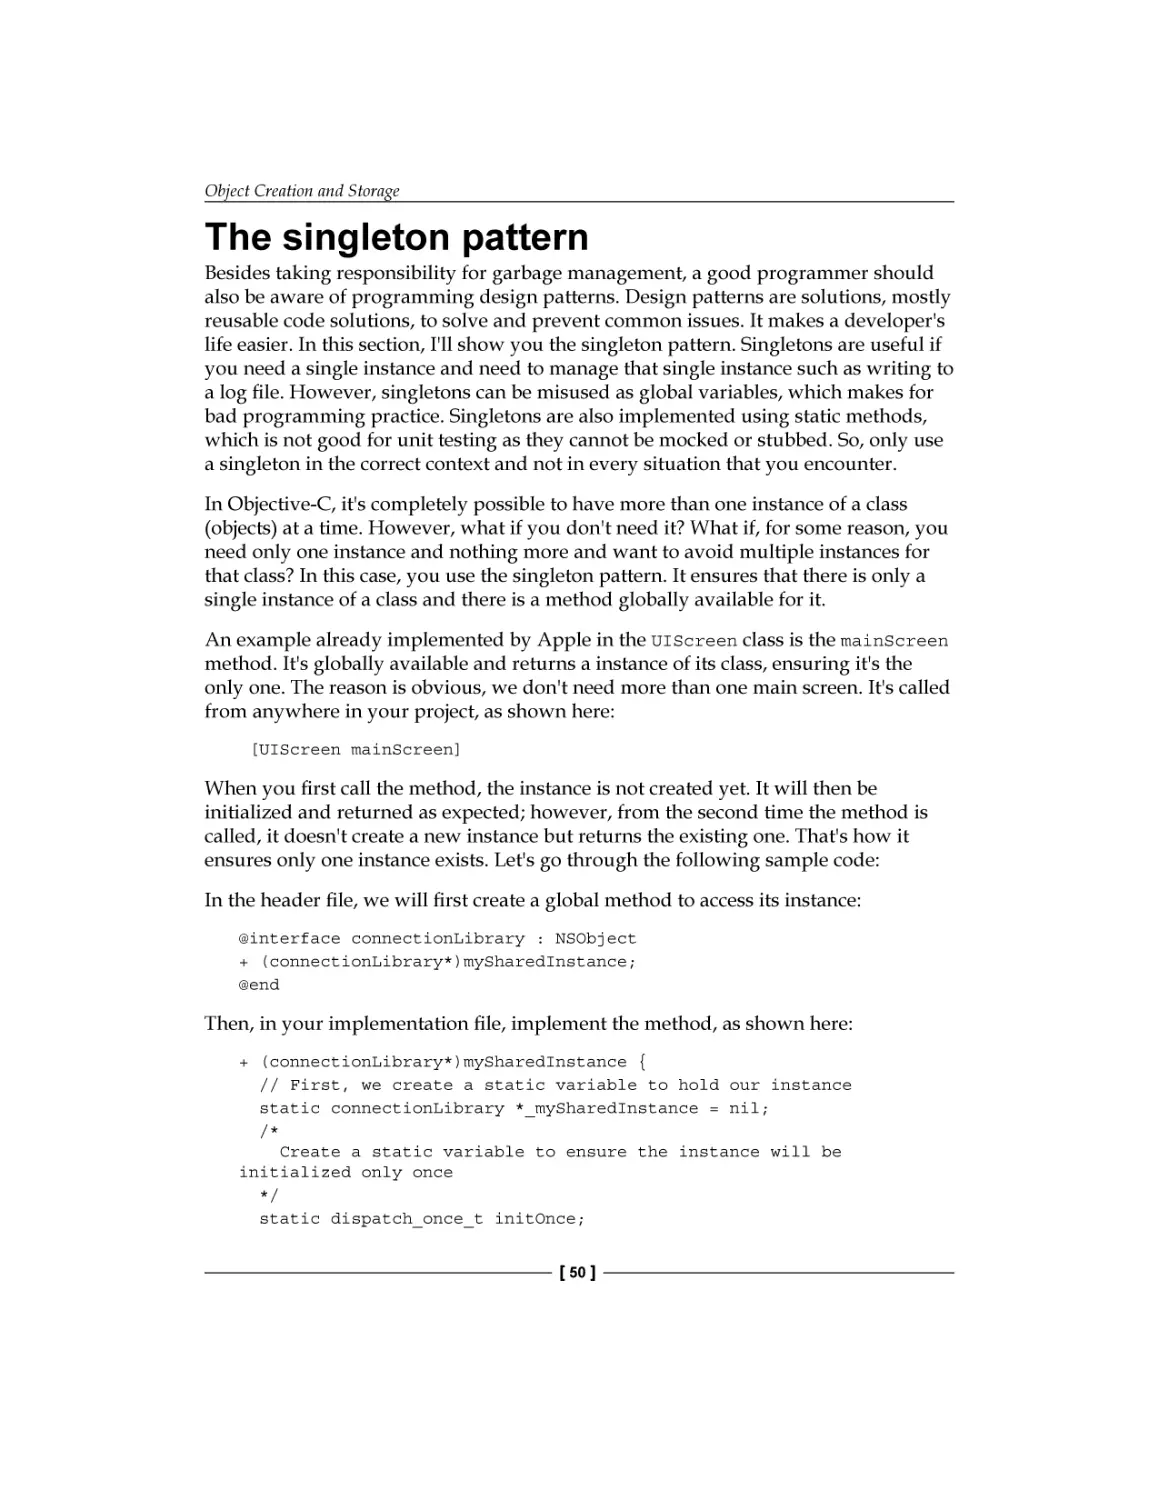 The singleton pattern